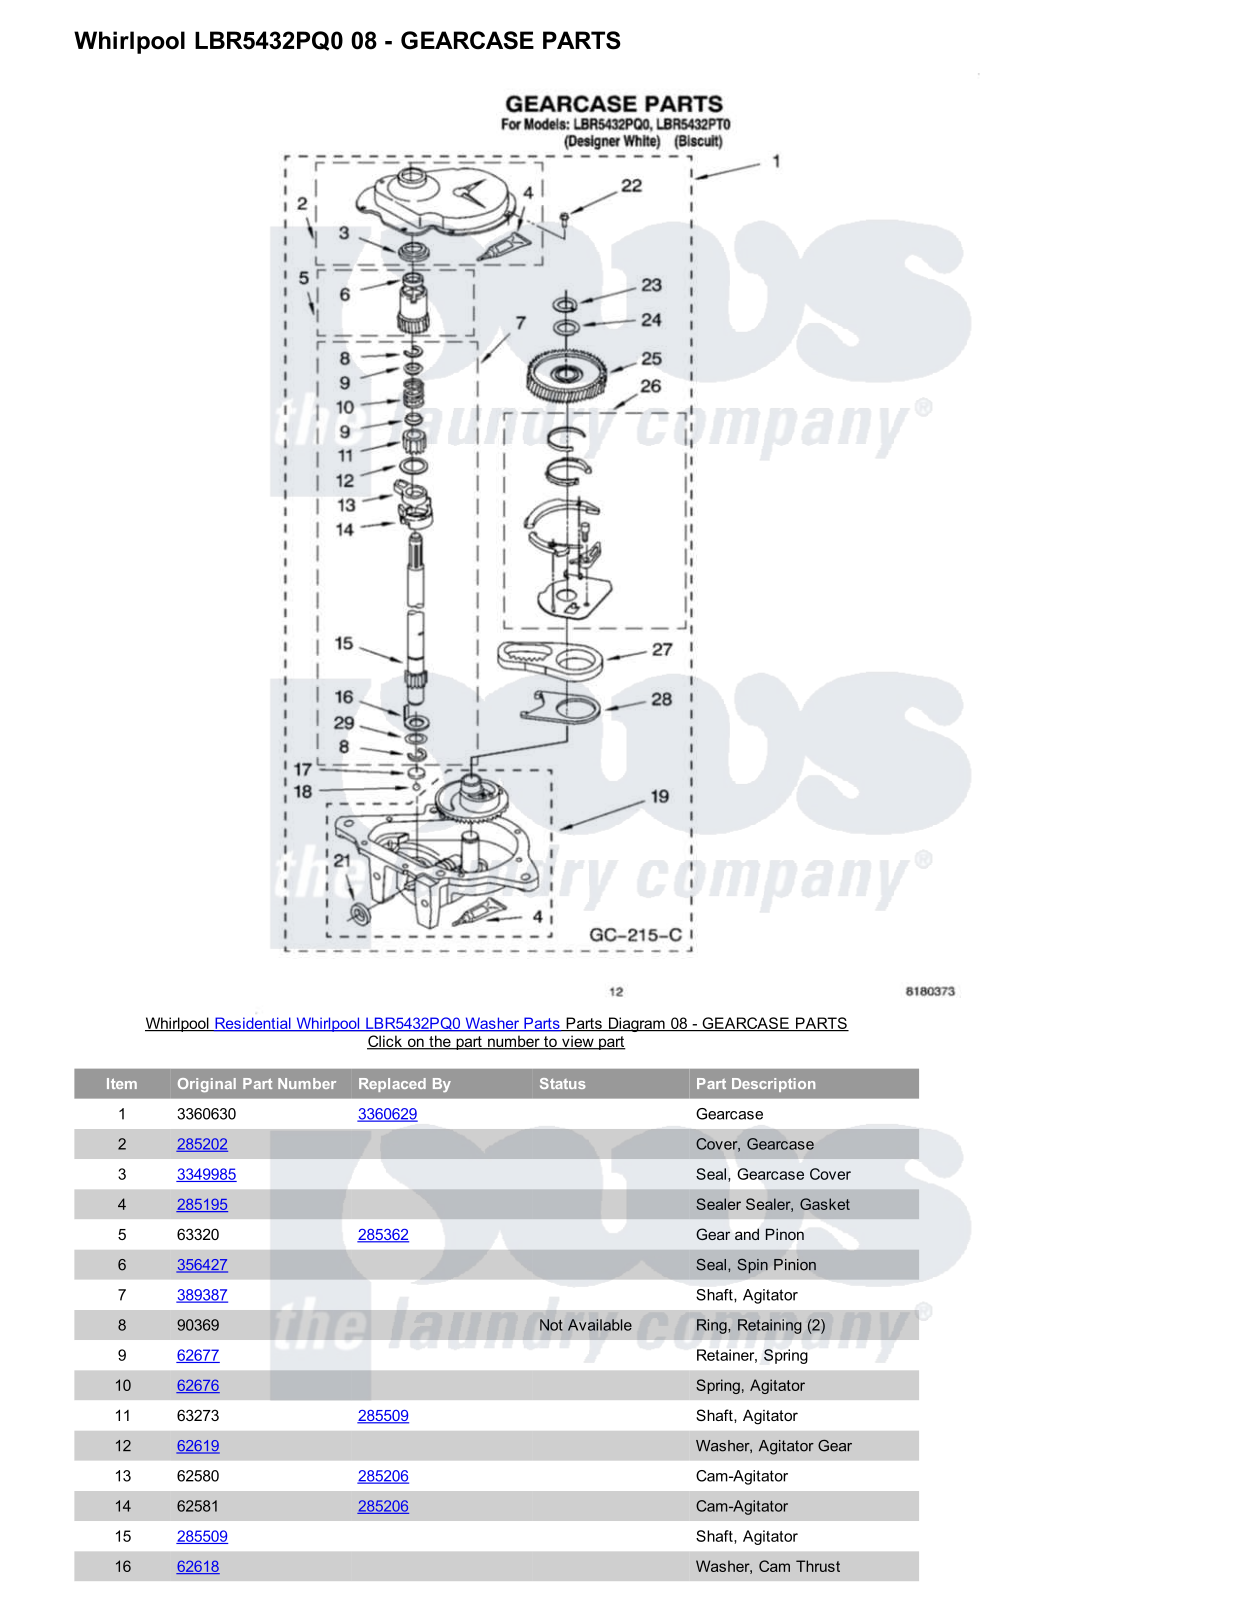 Whirlpool LBR5432PQ0 Parts Diagram